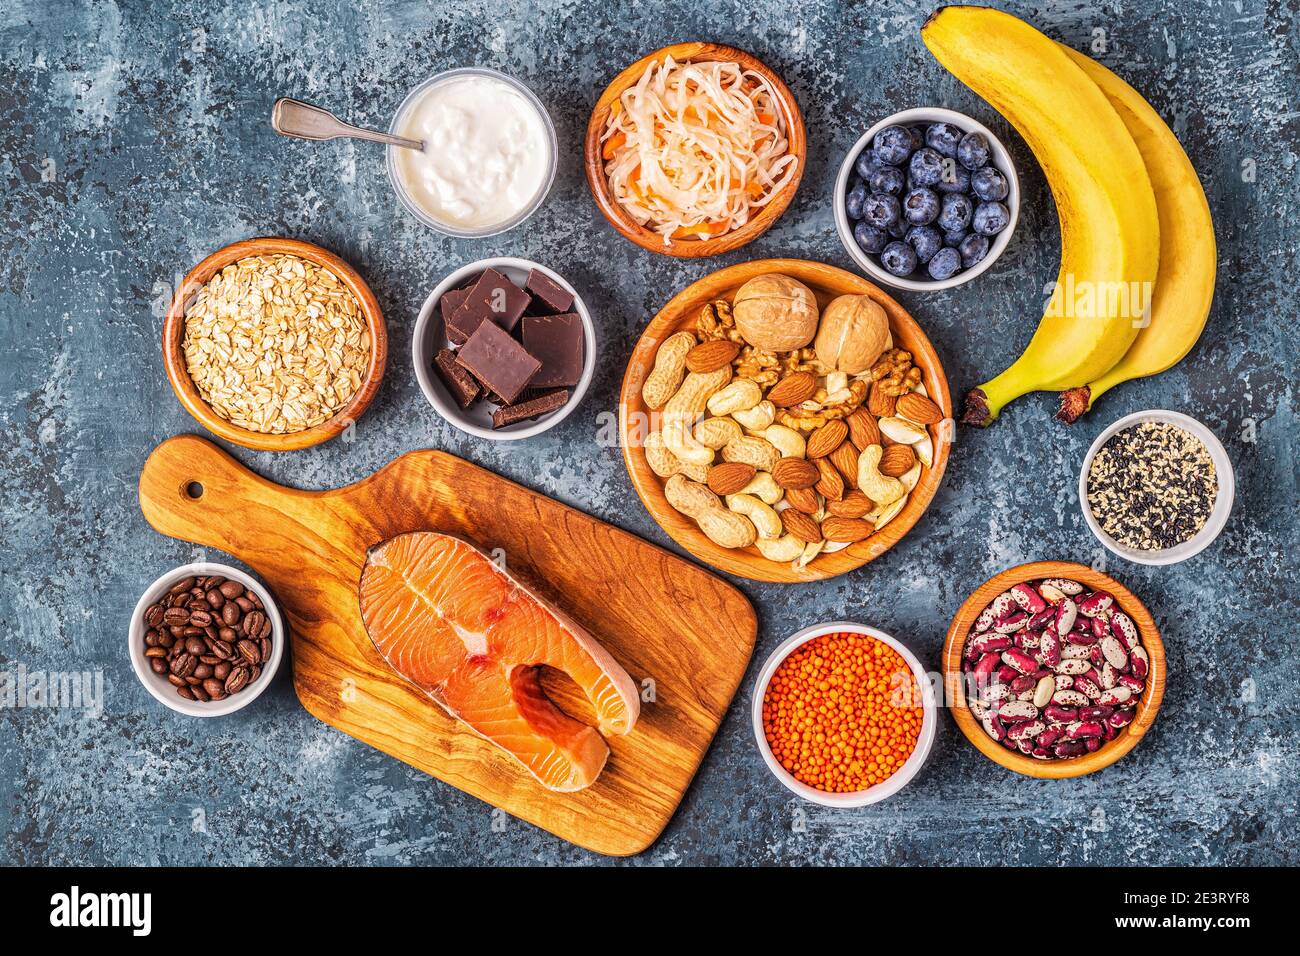 Healthy foods that lift your mood - salmon, dark chocolate, fermented foods (sauerkraut, yogurt), bananas, berries, nuts, oats, beans, lentils and cof Stock Photo